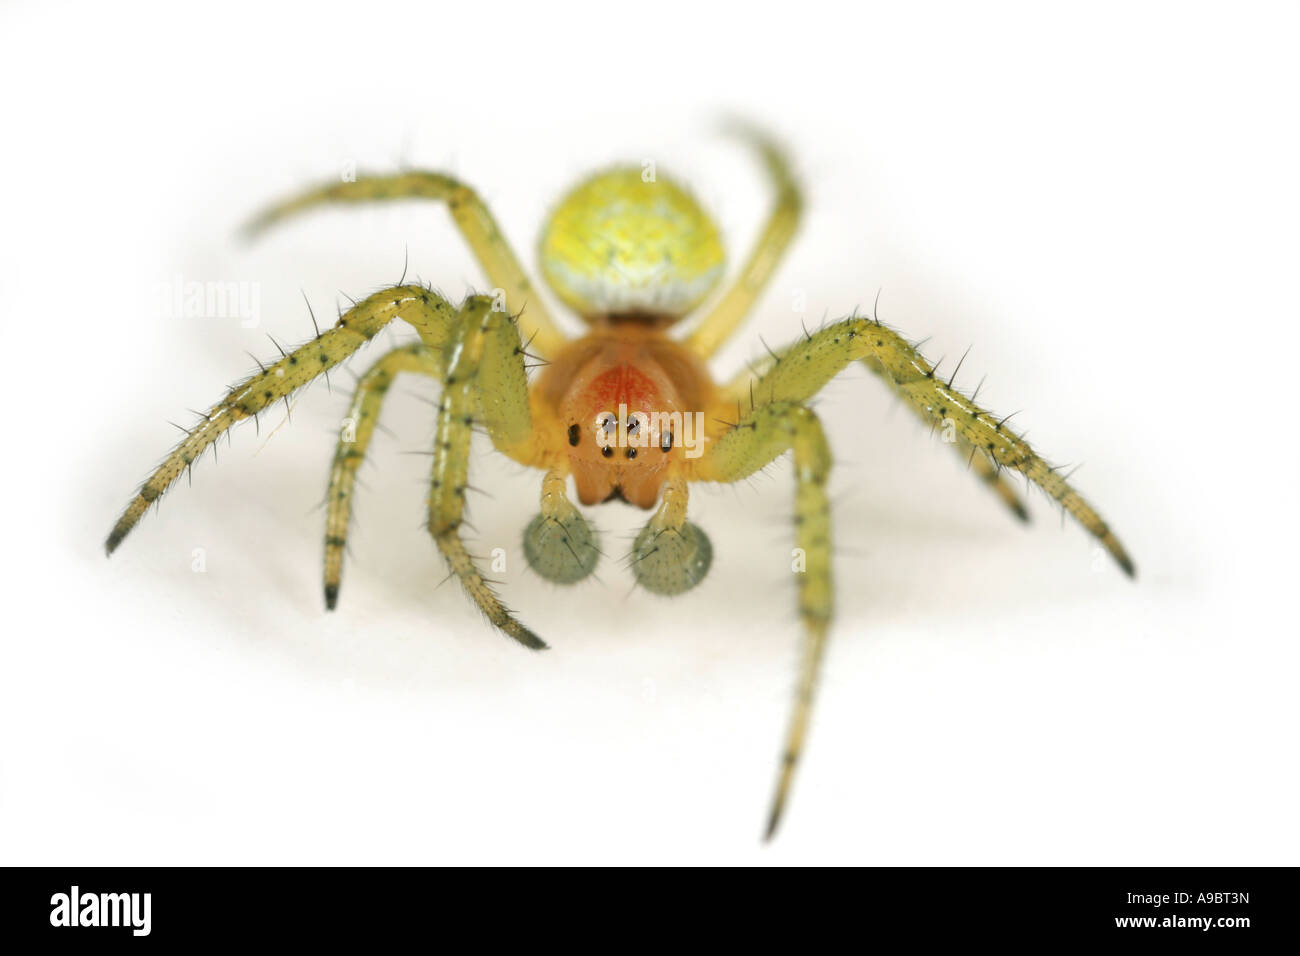 Cucumber Spider, Araniella Cucurbitina, on white background Stock Photo